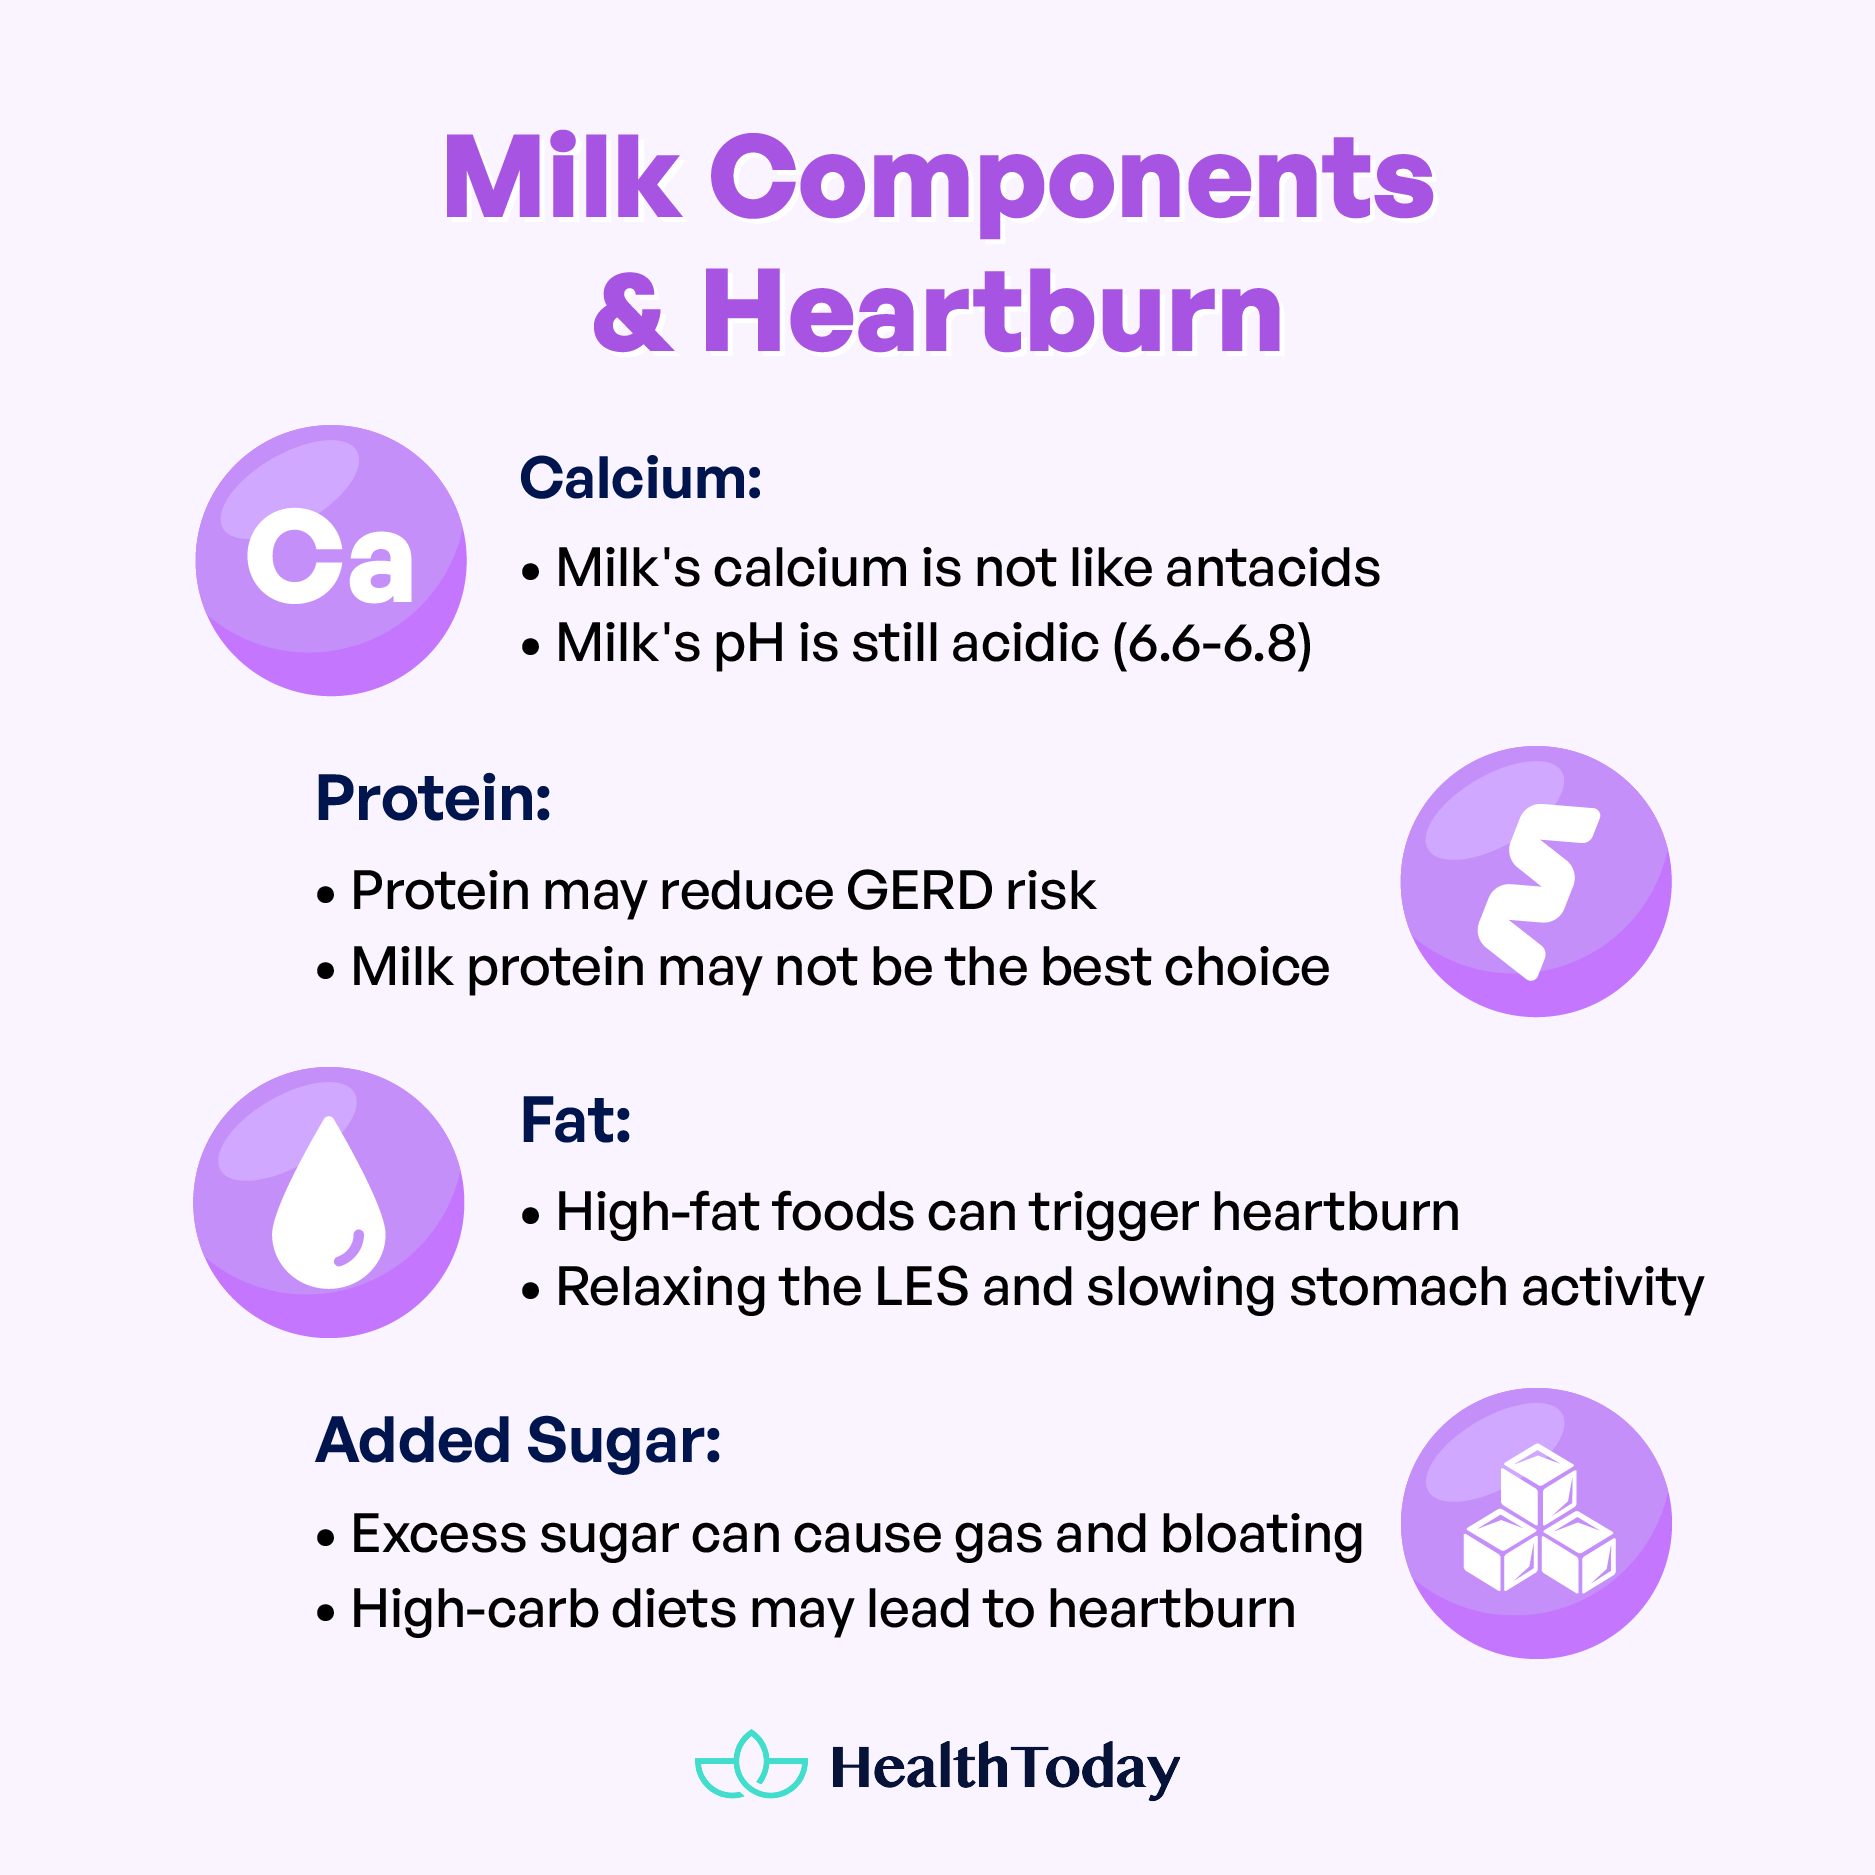 Milk components and heartburn